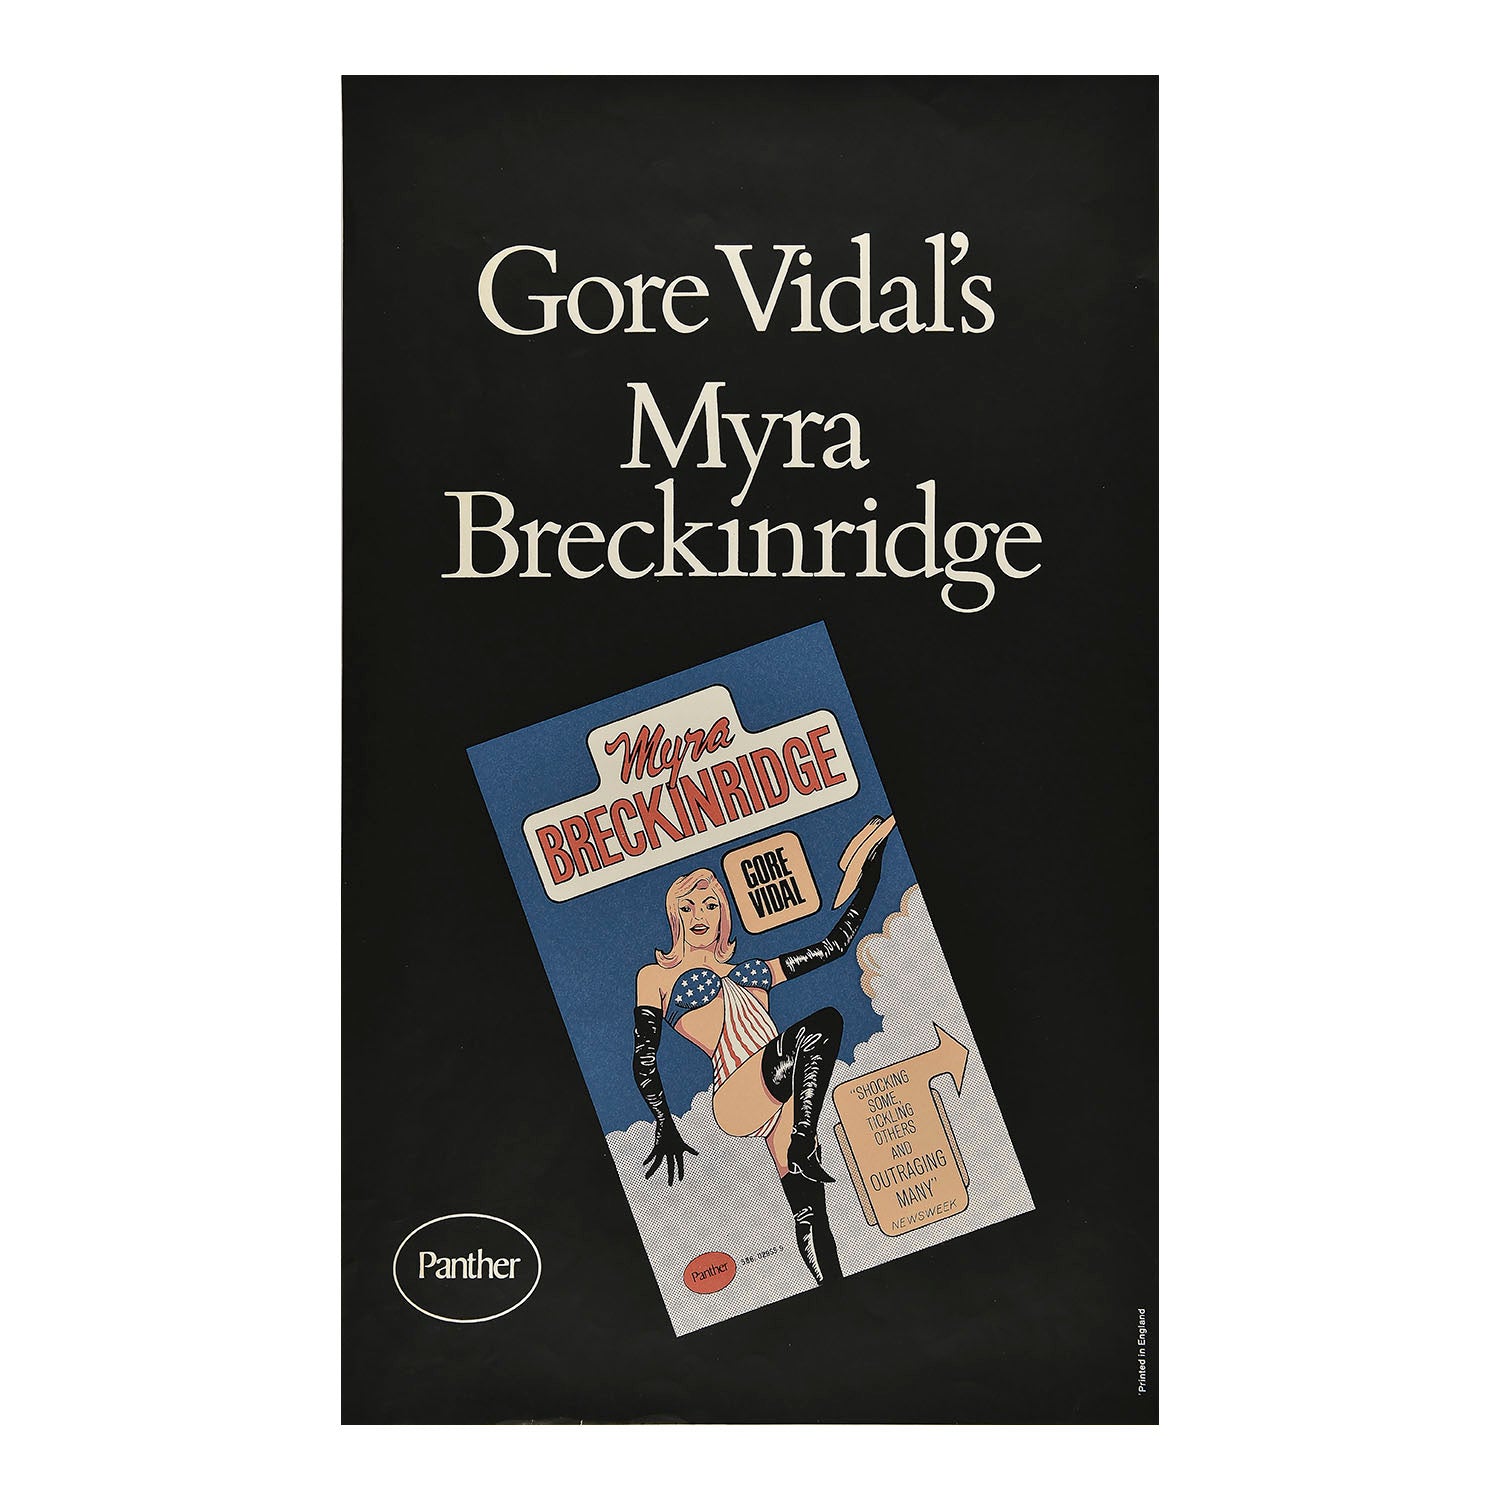 original, in-store promotional poster for Myra Breckinridge, a satirical novel by Gore Vidal, 1968.